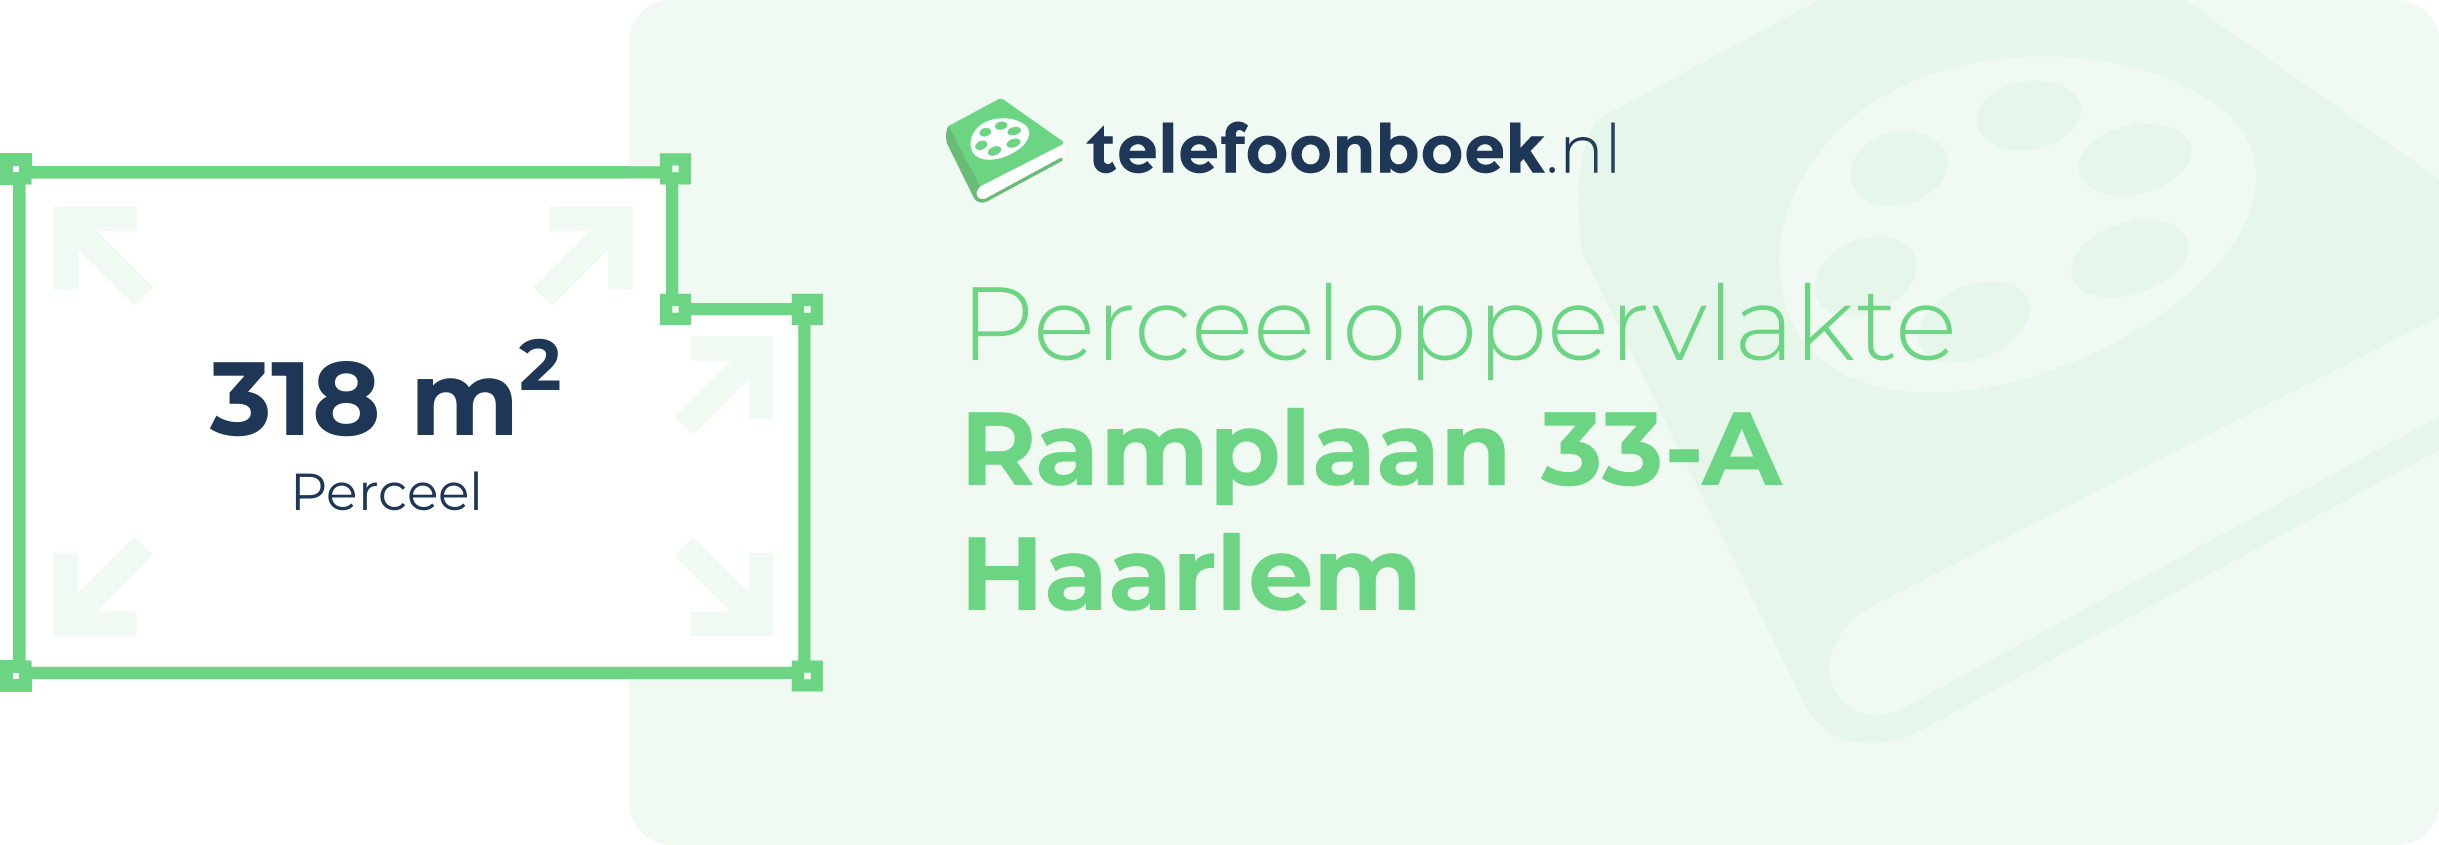 Perceeloppervlakte Ramplaan 33-A Haarlem